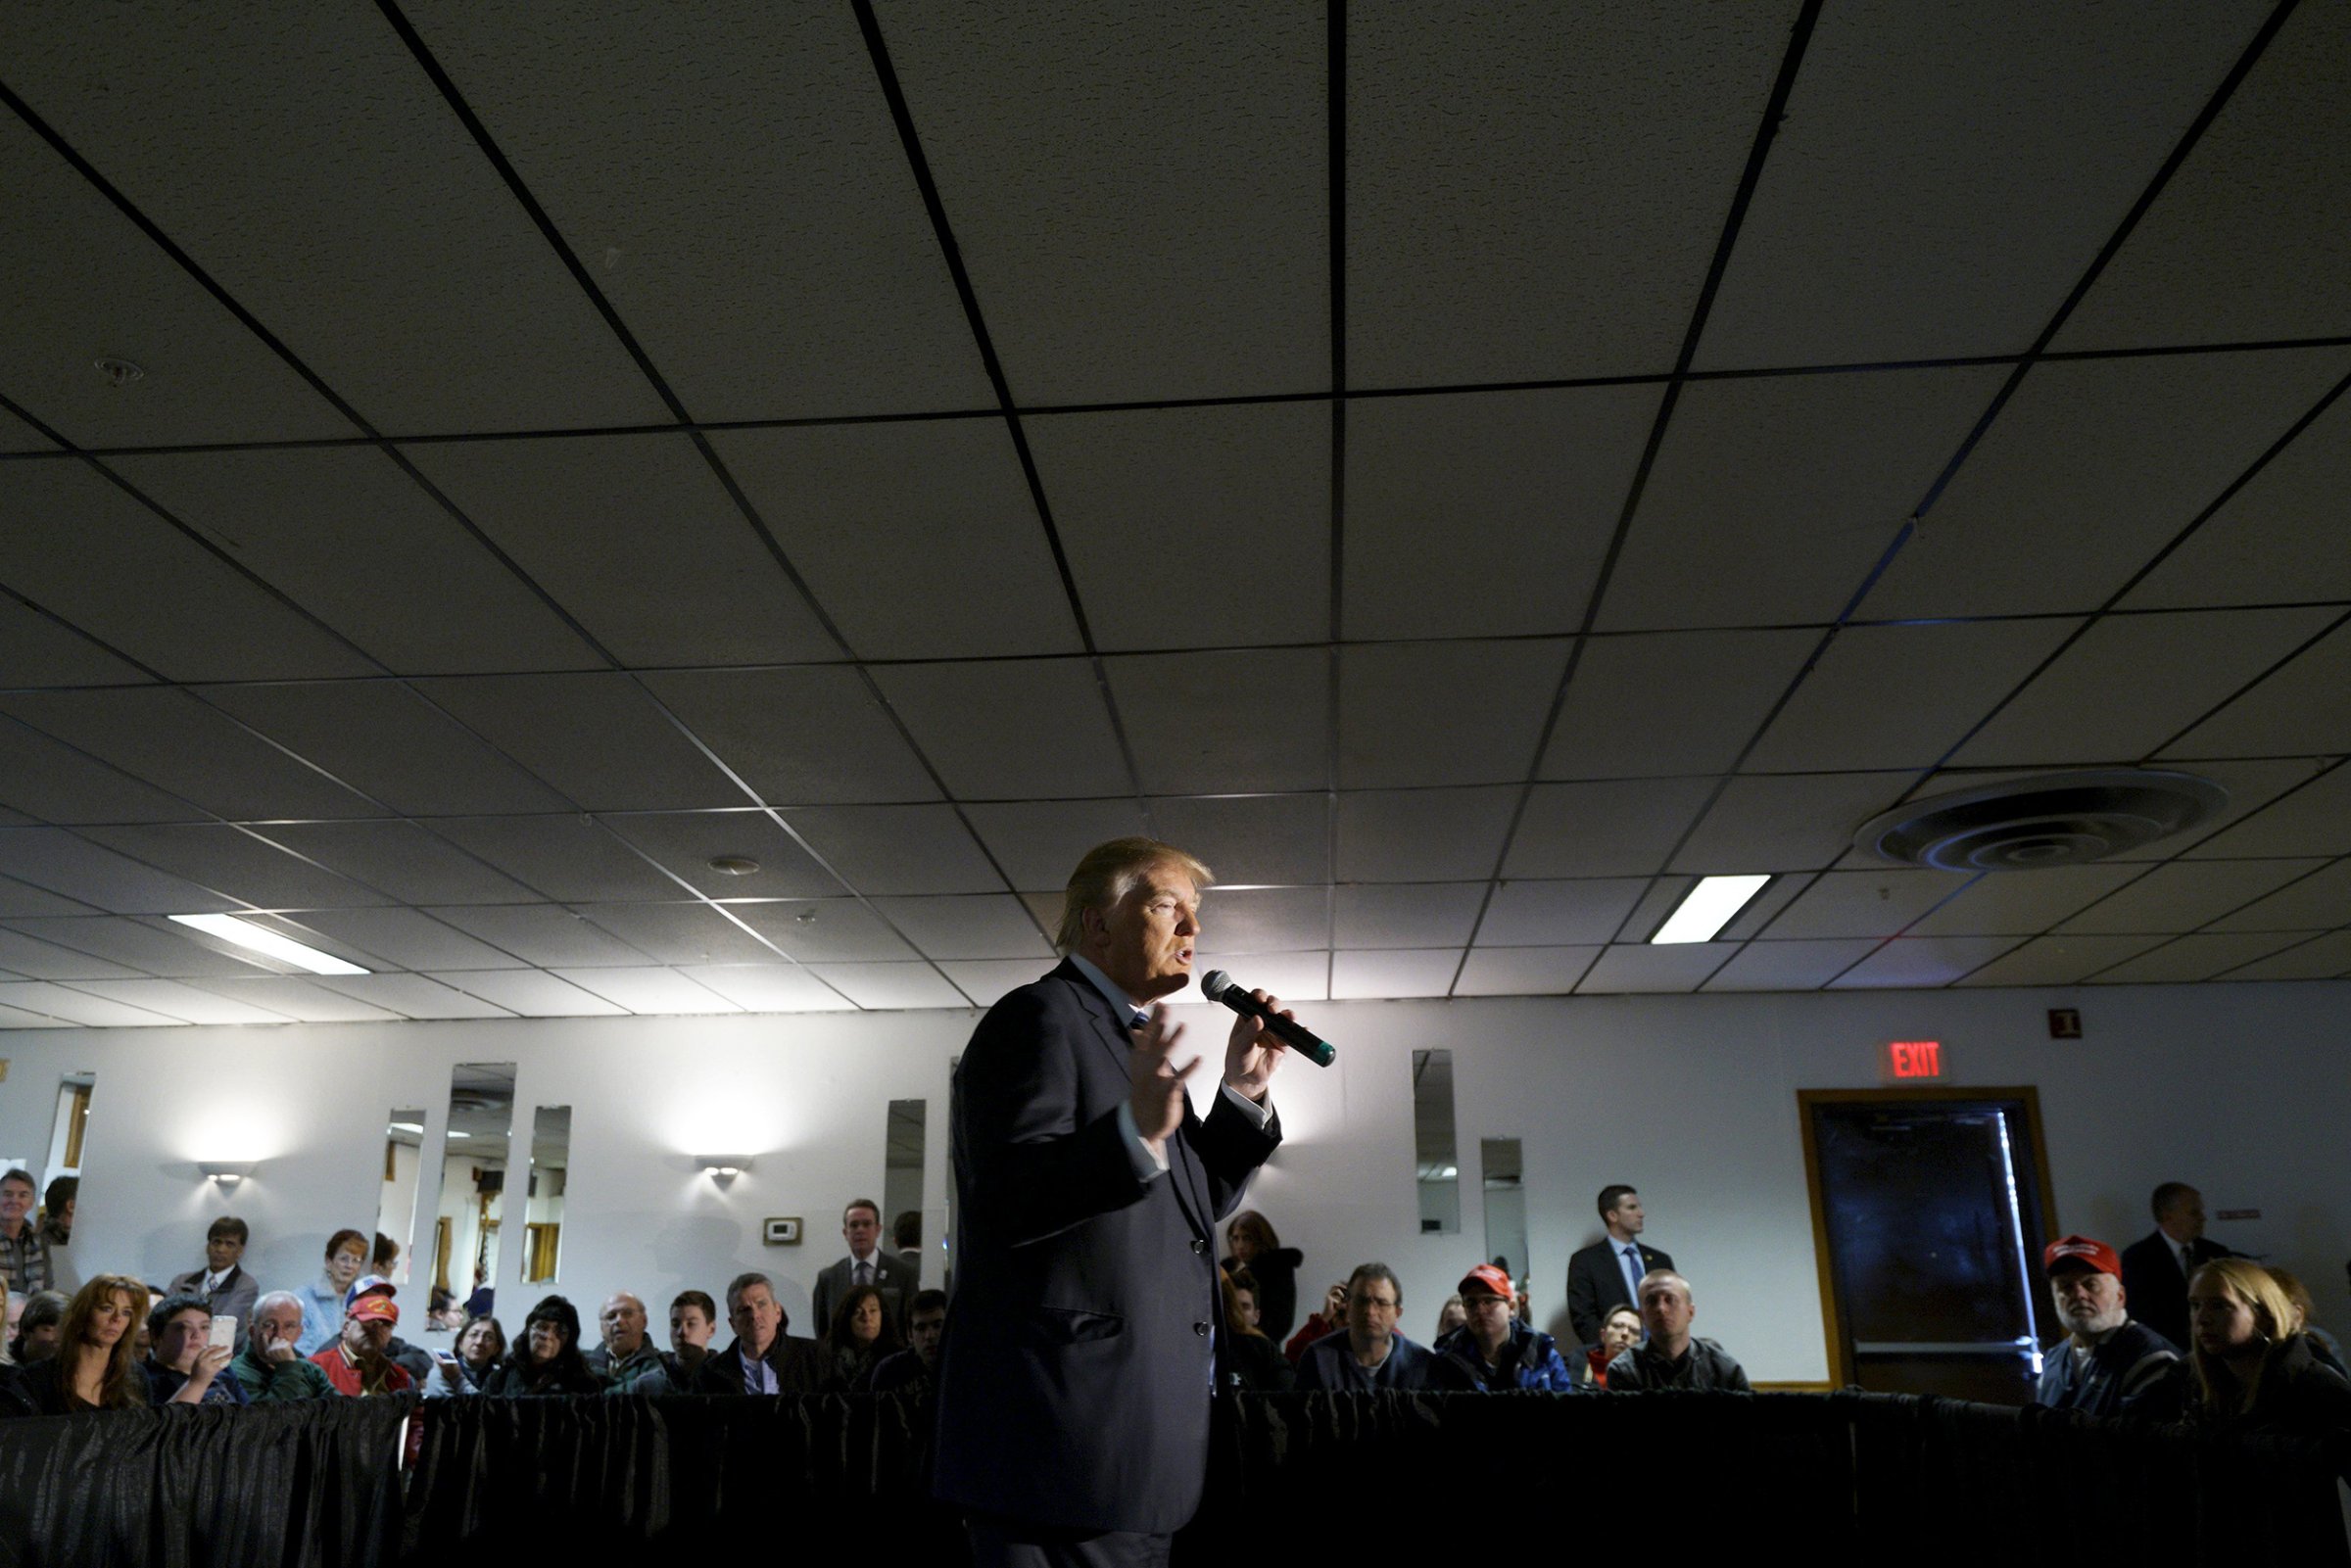 U.S. Republican presidential candidate Donald Trump speaks at an Elks Lodge in Salem, NH on Feb. 8, 2016.